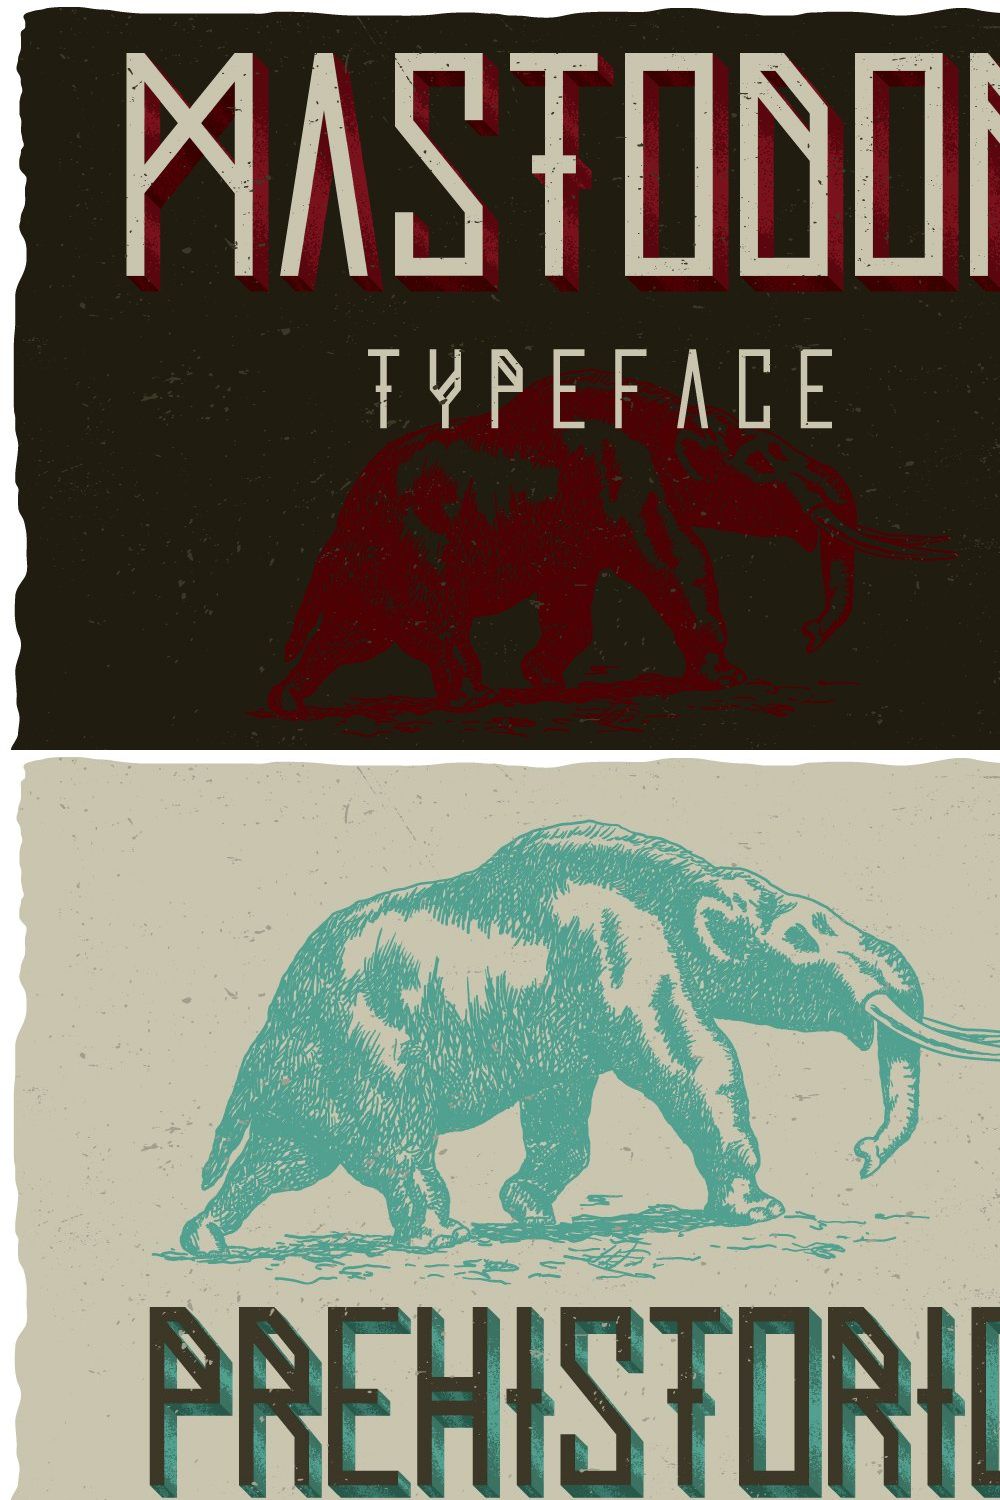 Mastodon Typeface pinterest preview image.